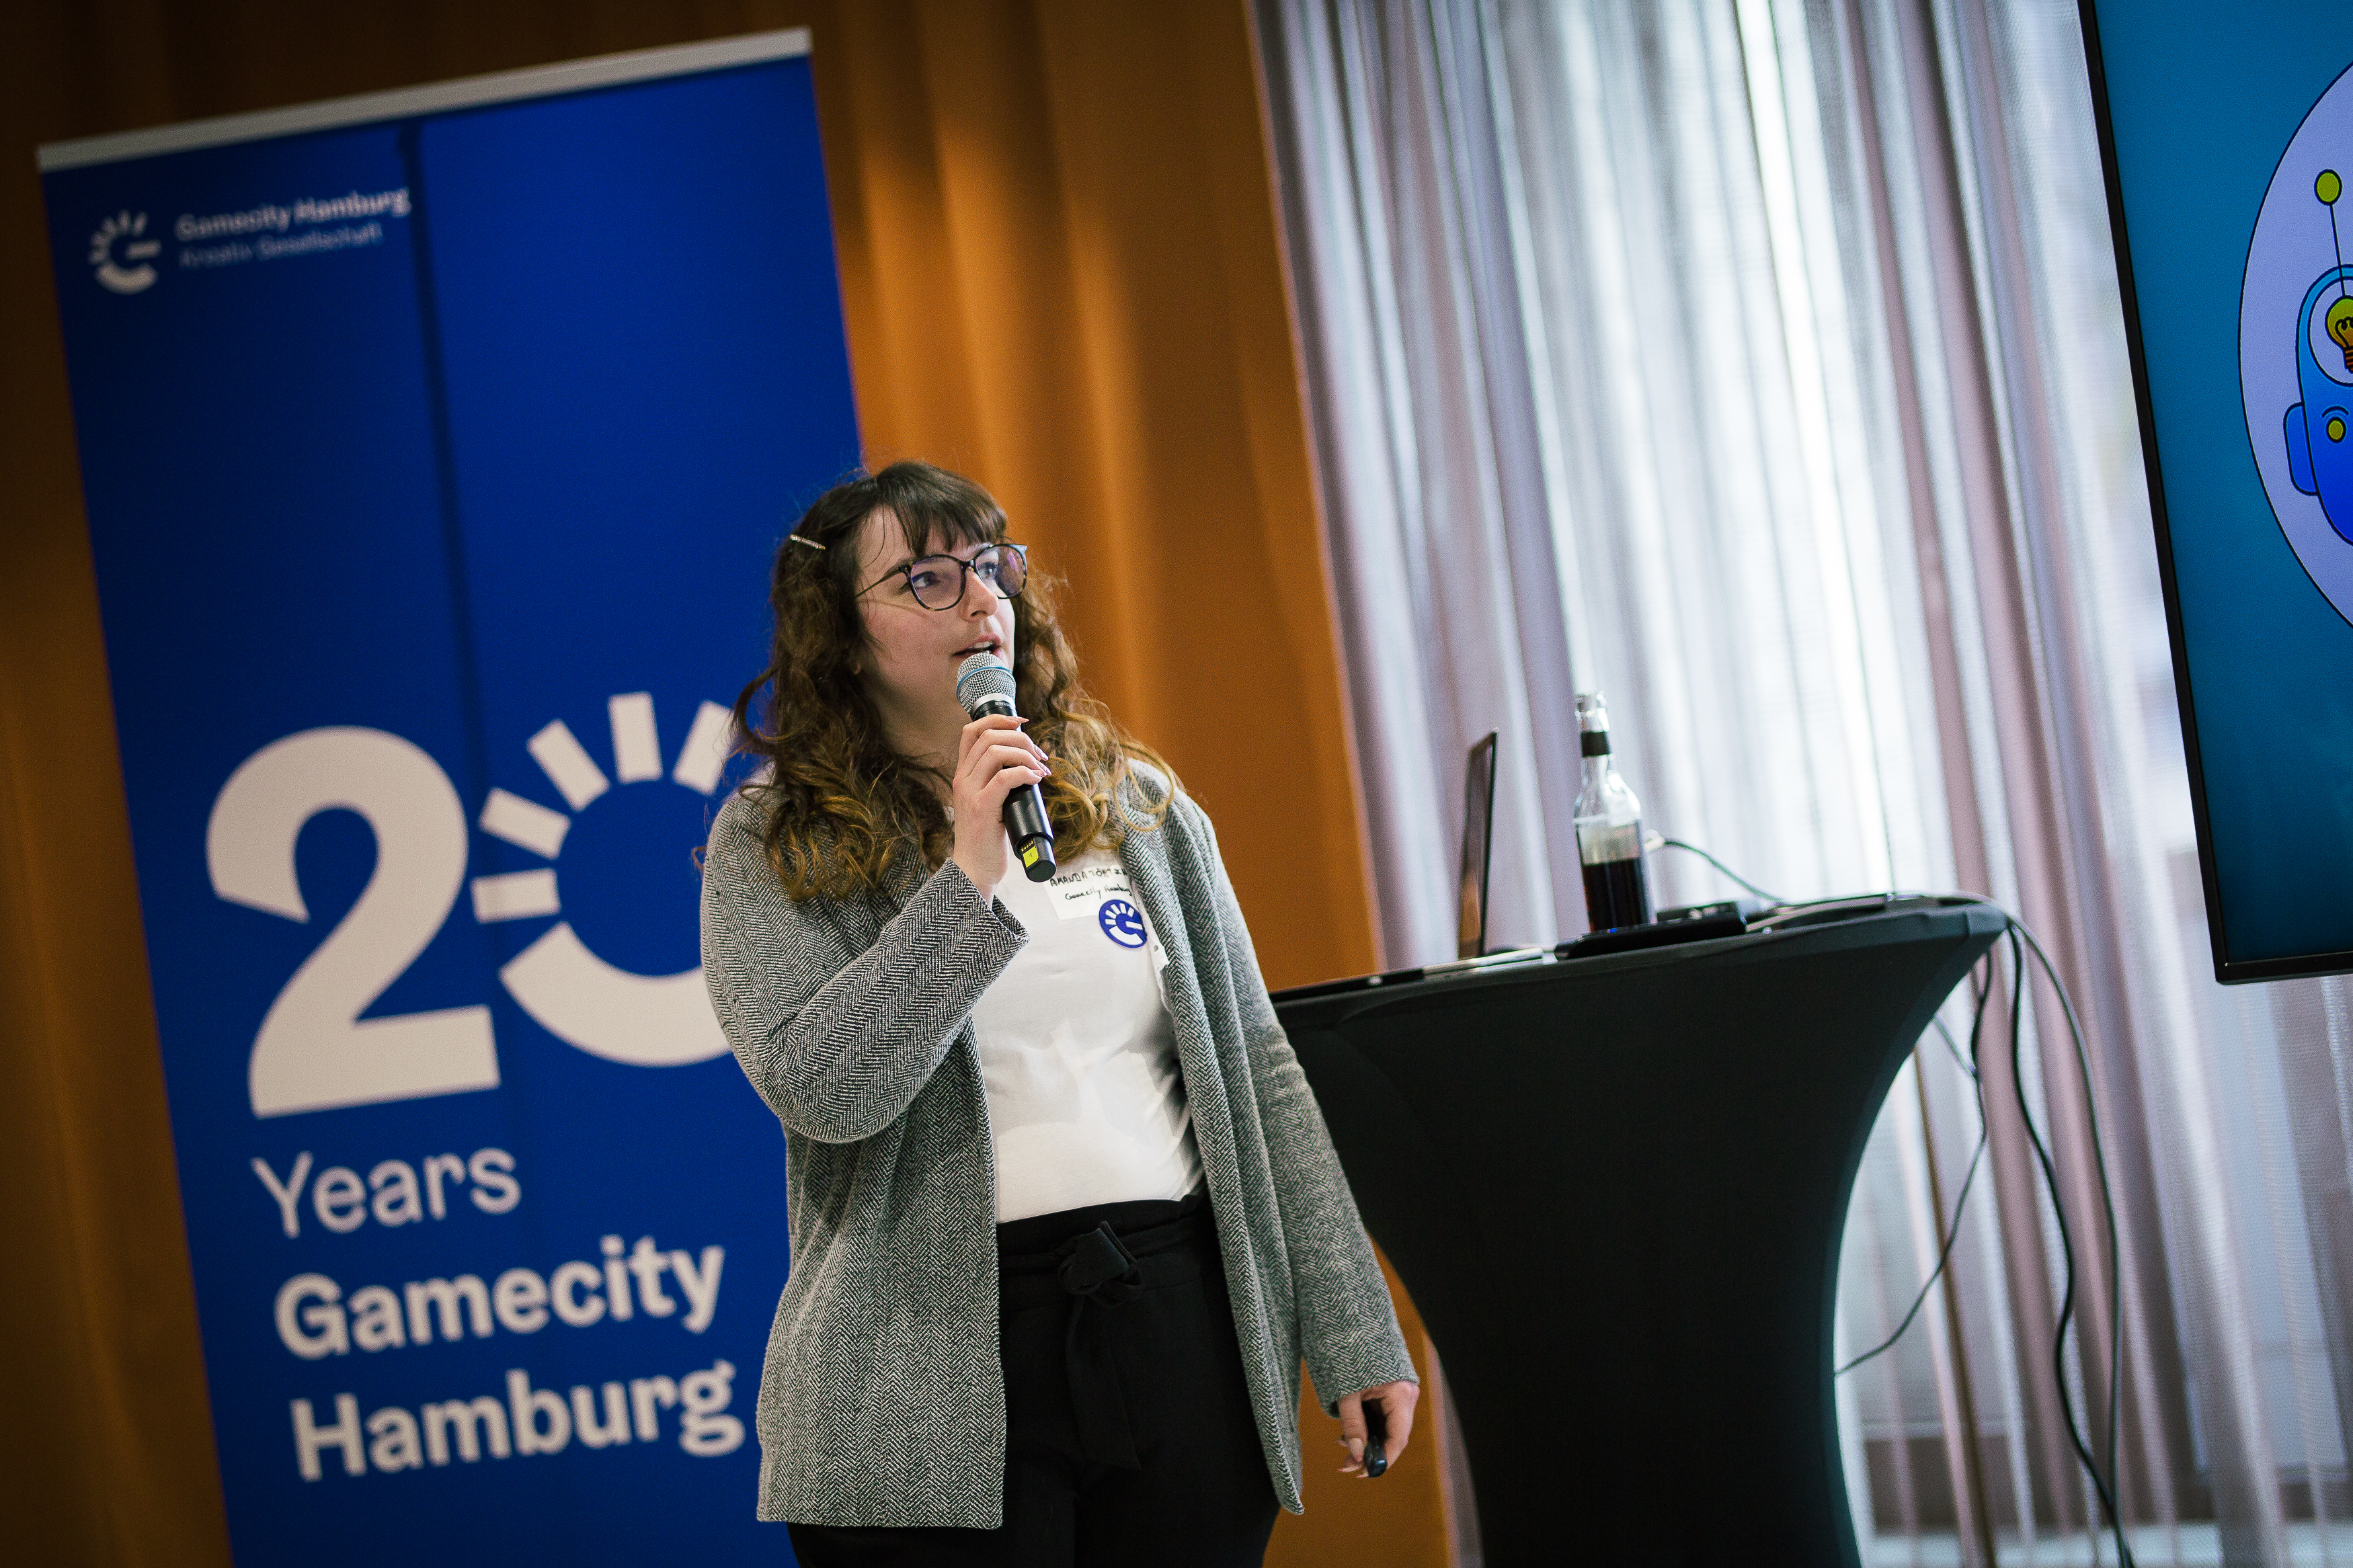 Amanda Förtsch (Gamecity Hamburg) gave an overview on how Gamecity Hamburg supports devs